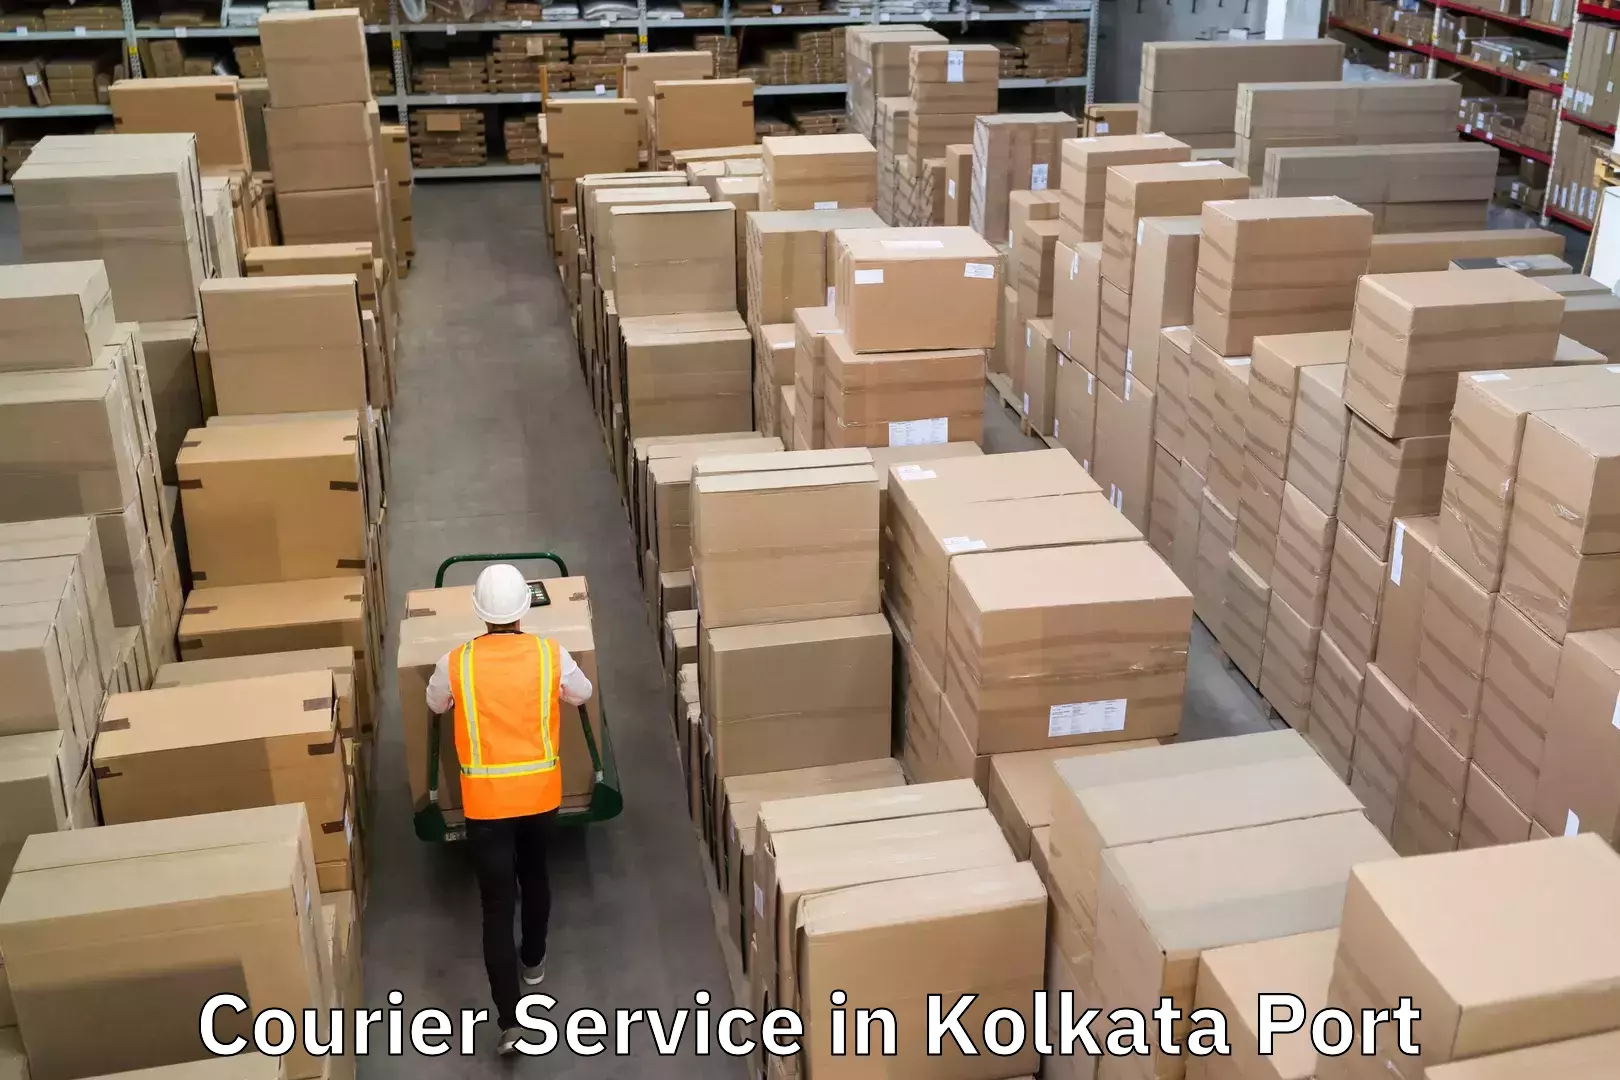 On-demand shipping options in Kolkata Port